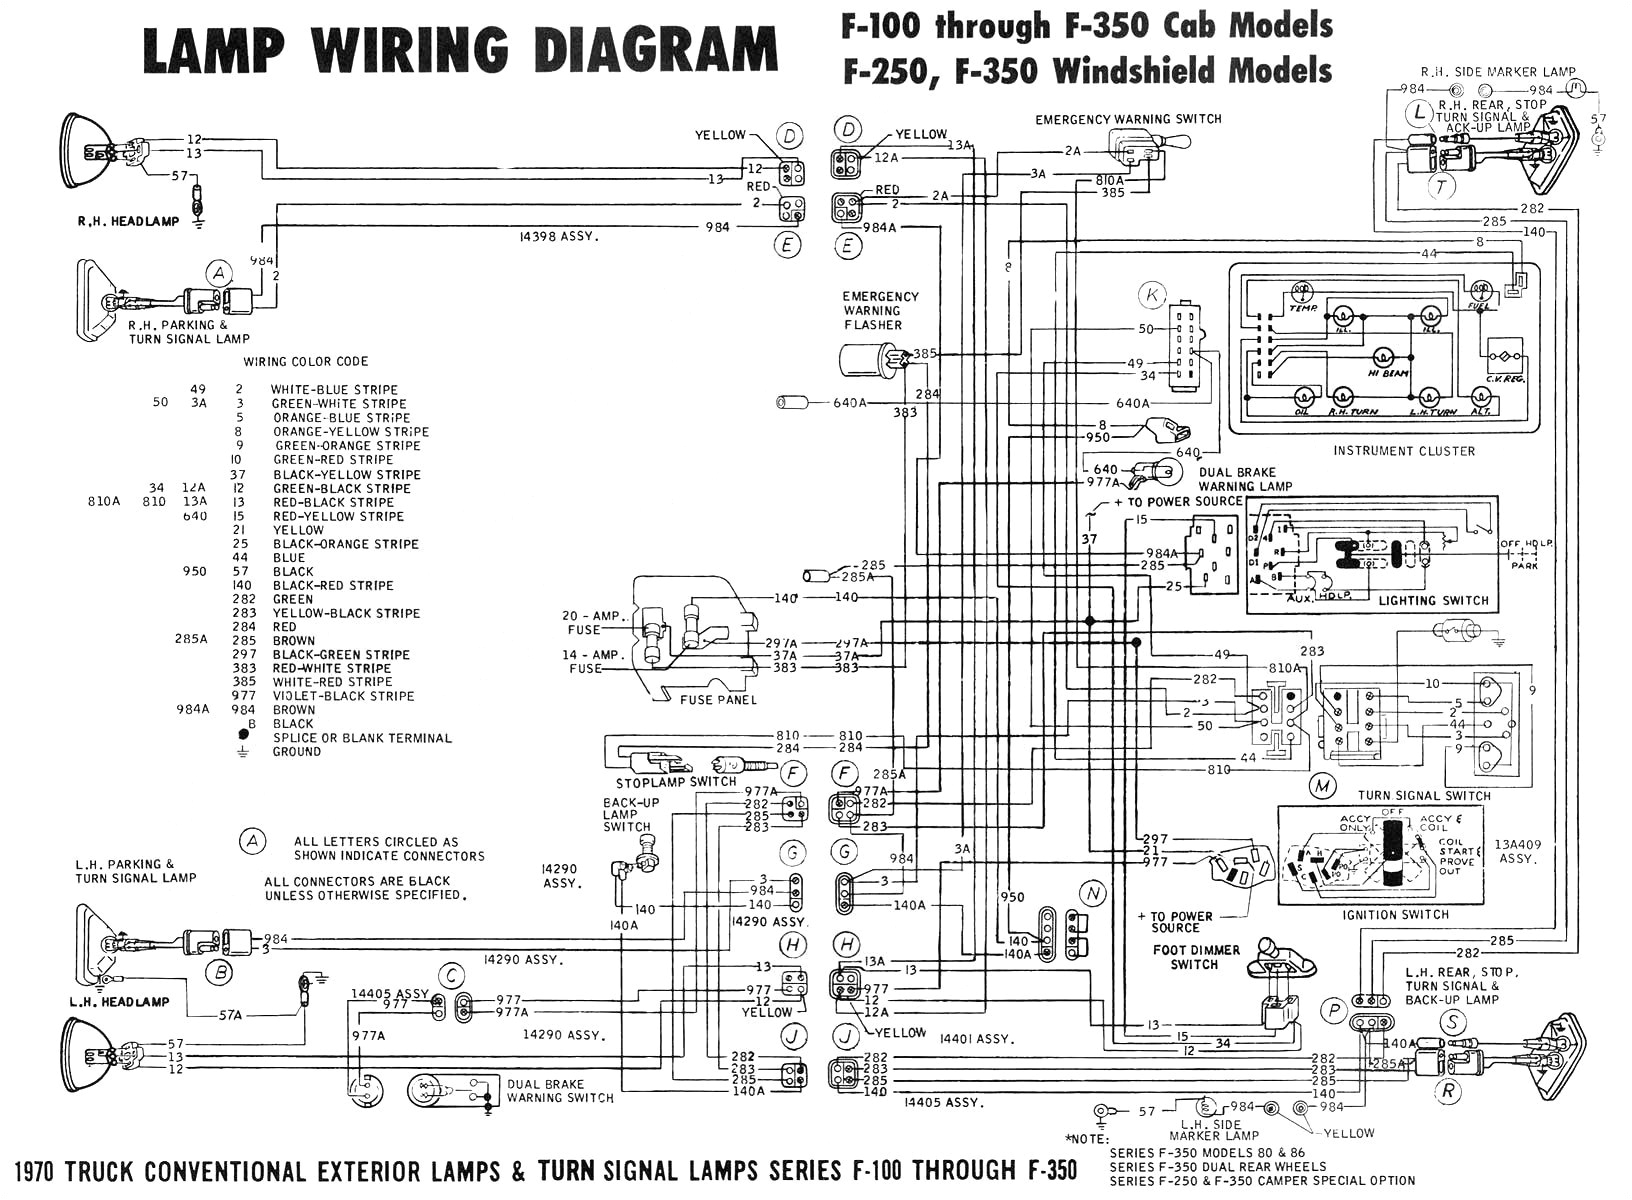 db15 monitor wiring schematic wiring diagram blog db15 monitor wiring schematic wiring diagram db15 monitor wiring